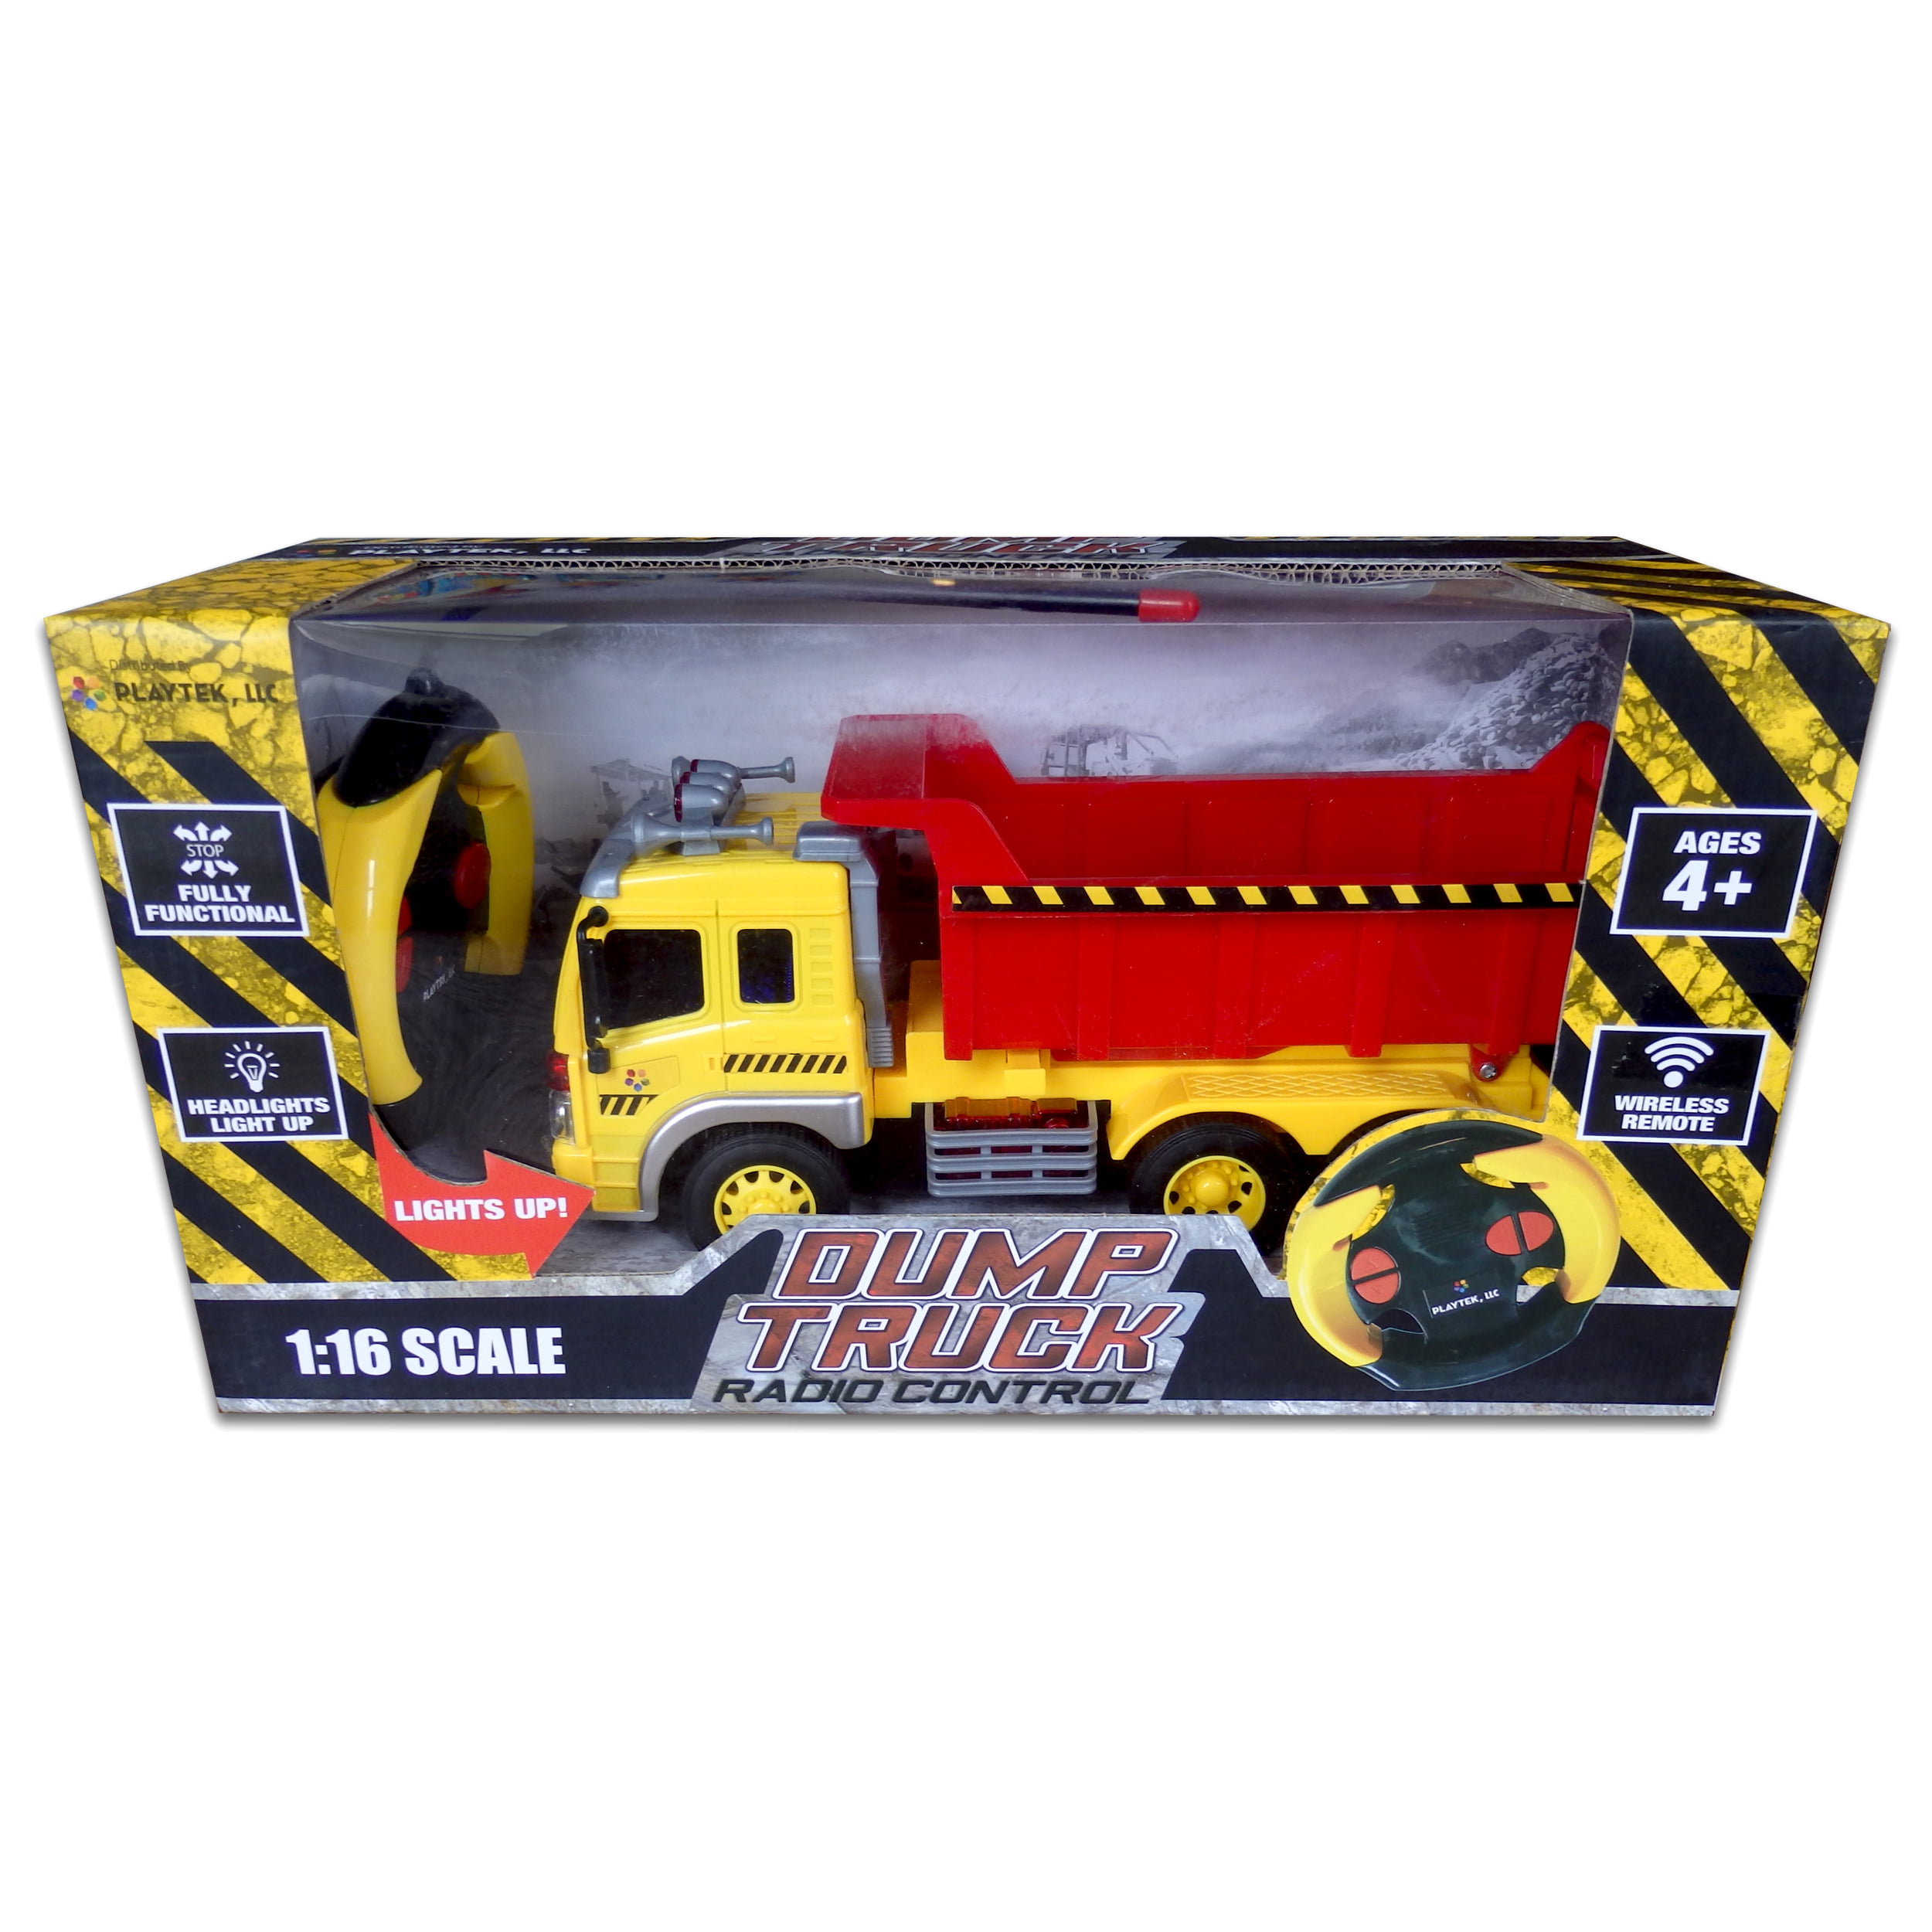 BIG Radio Controllato macchinari pesanti camion Boys Cars Toys Box Kids by-playtek 